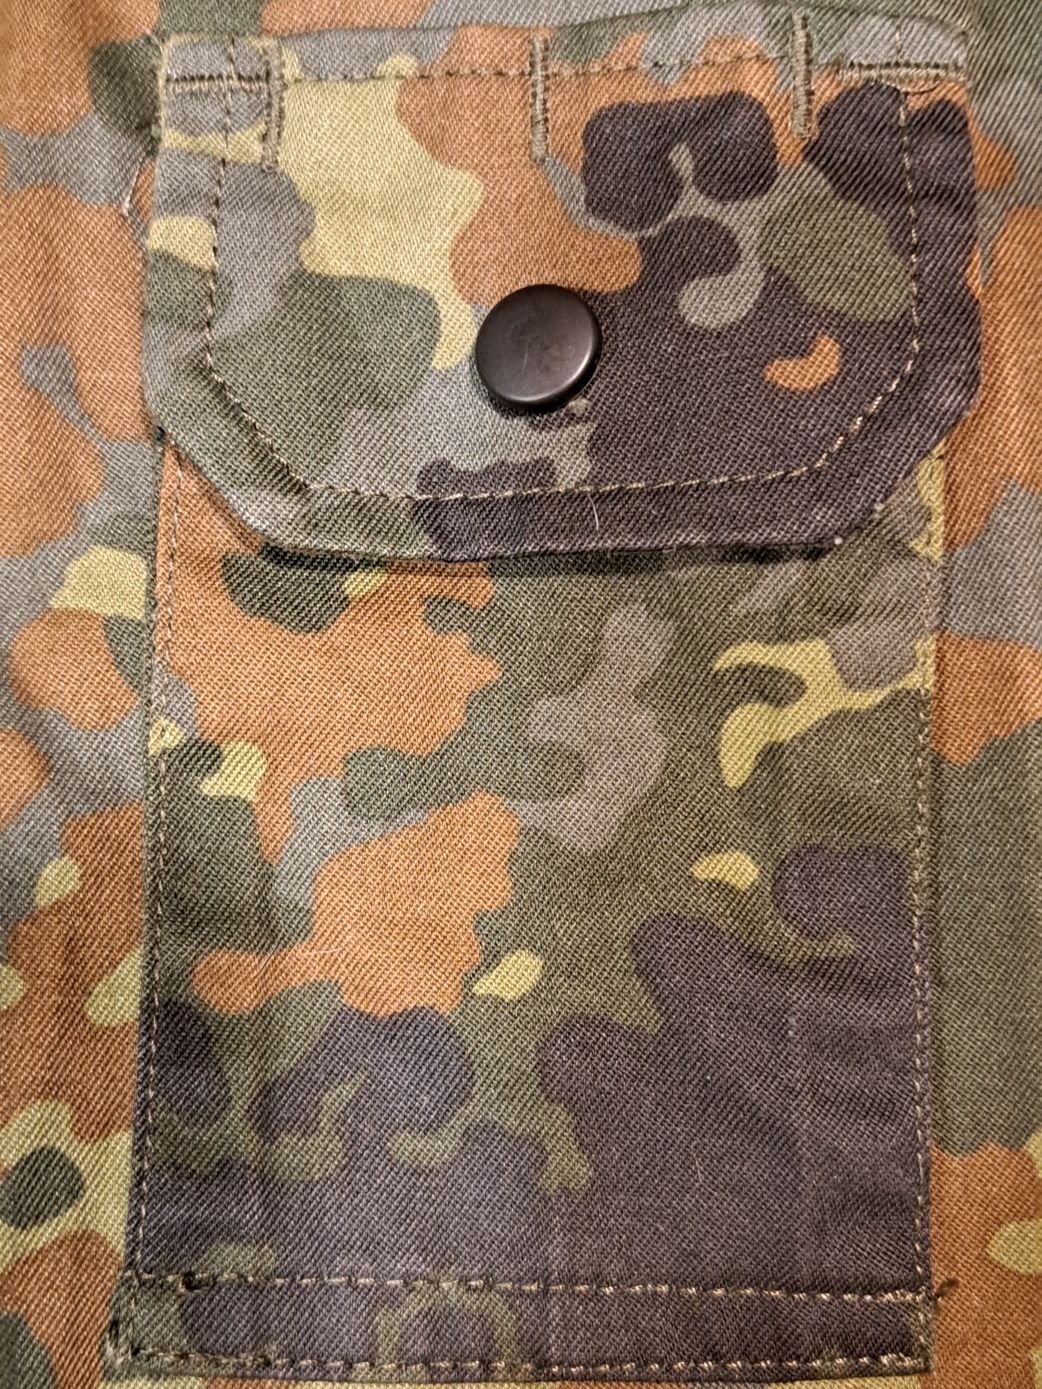 Bluza / kurtka wojskowa Bundeswehra, kamuflaż flecktarn, moro.